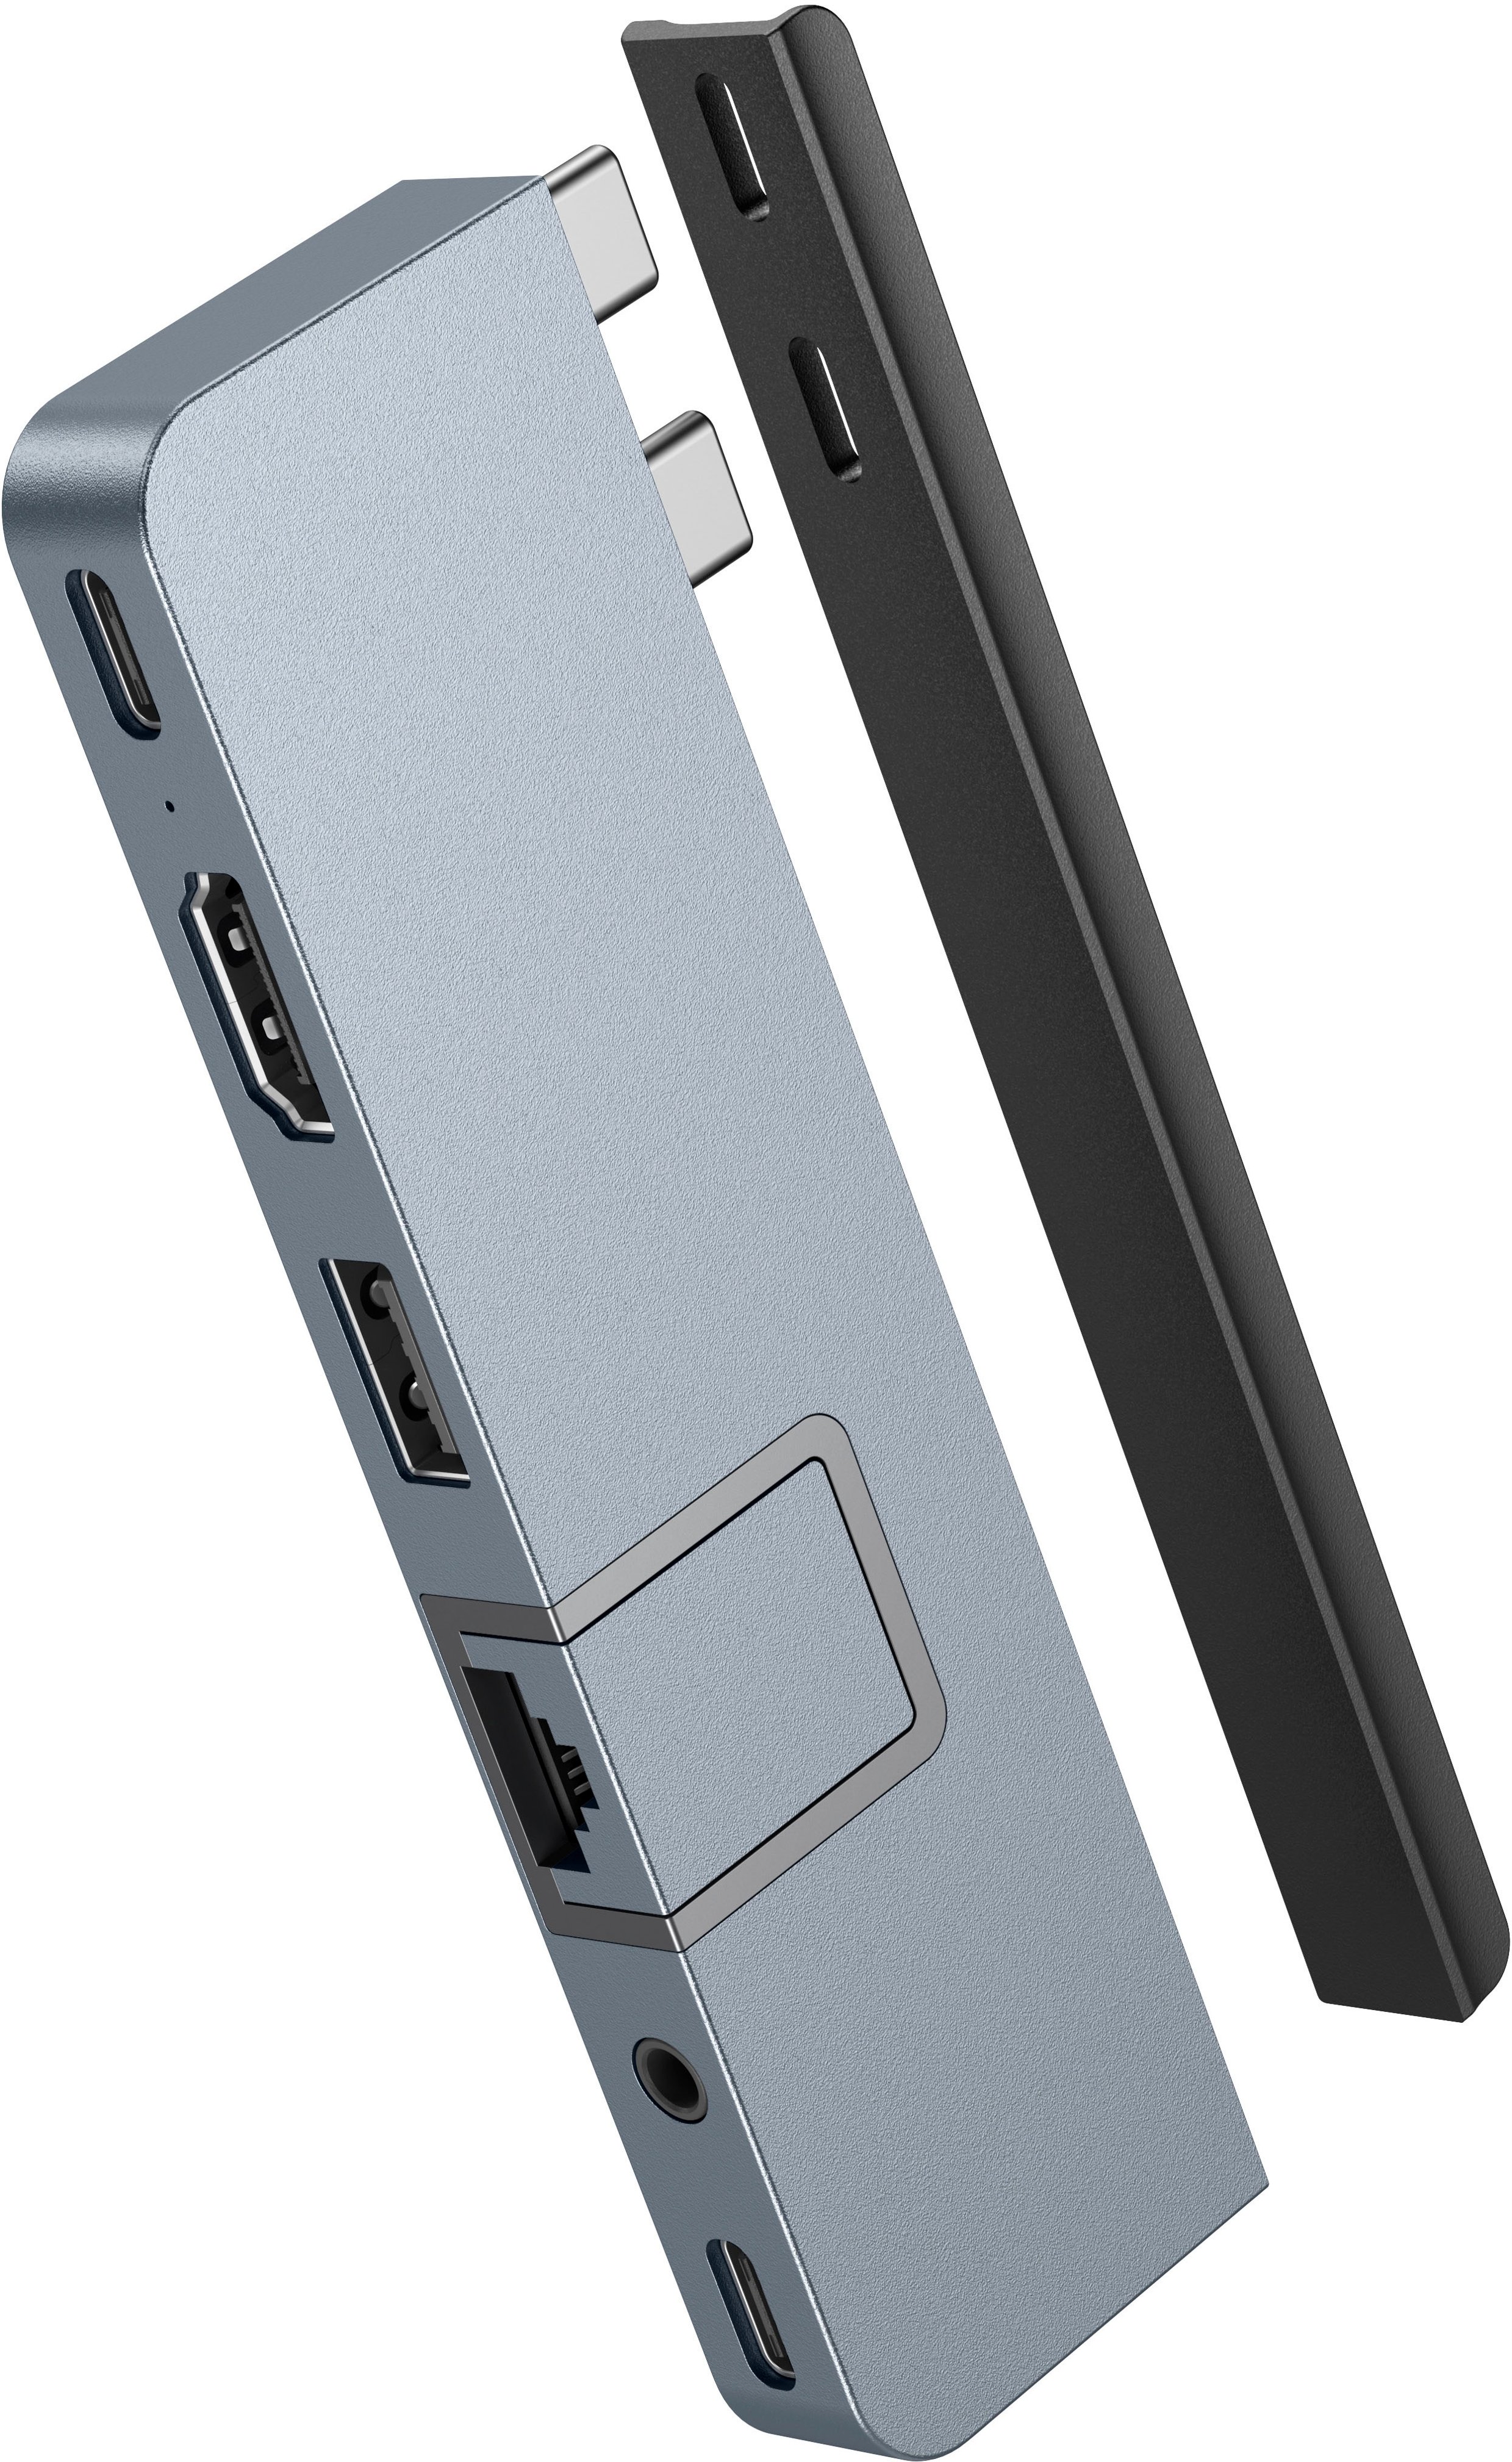 HYPER's 'DUO PRO' 7-in-2 USB-C Hub Debuts for New MacBook Pro